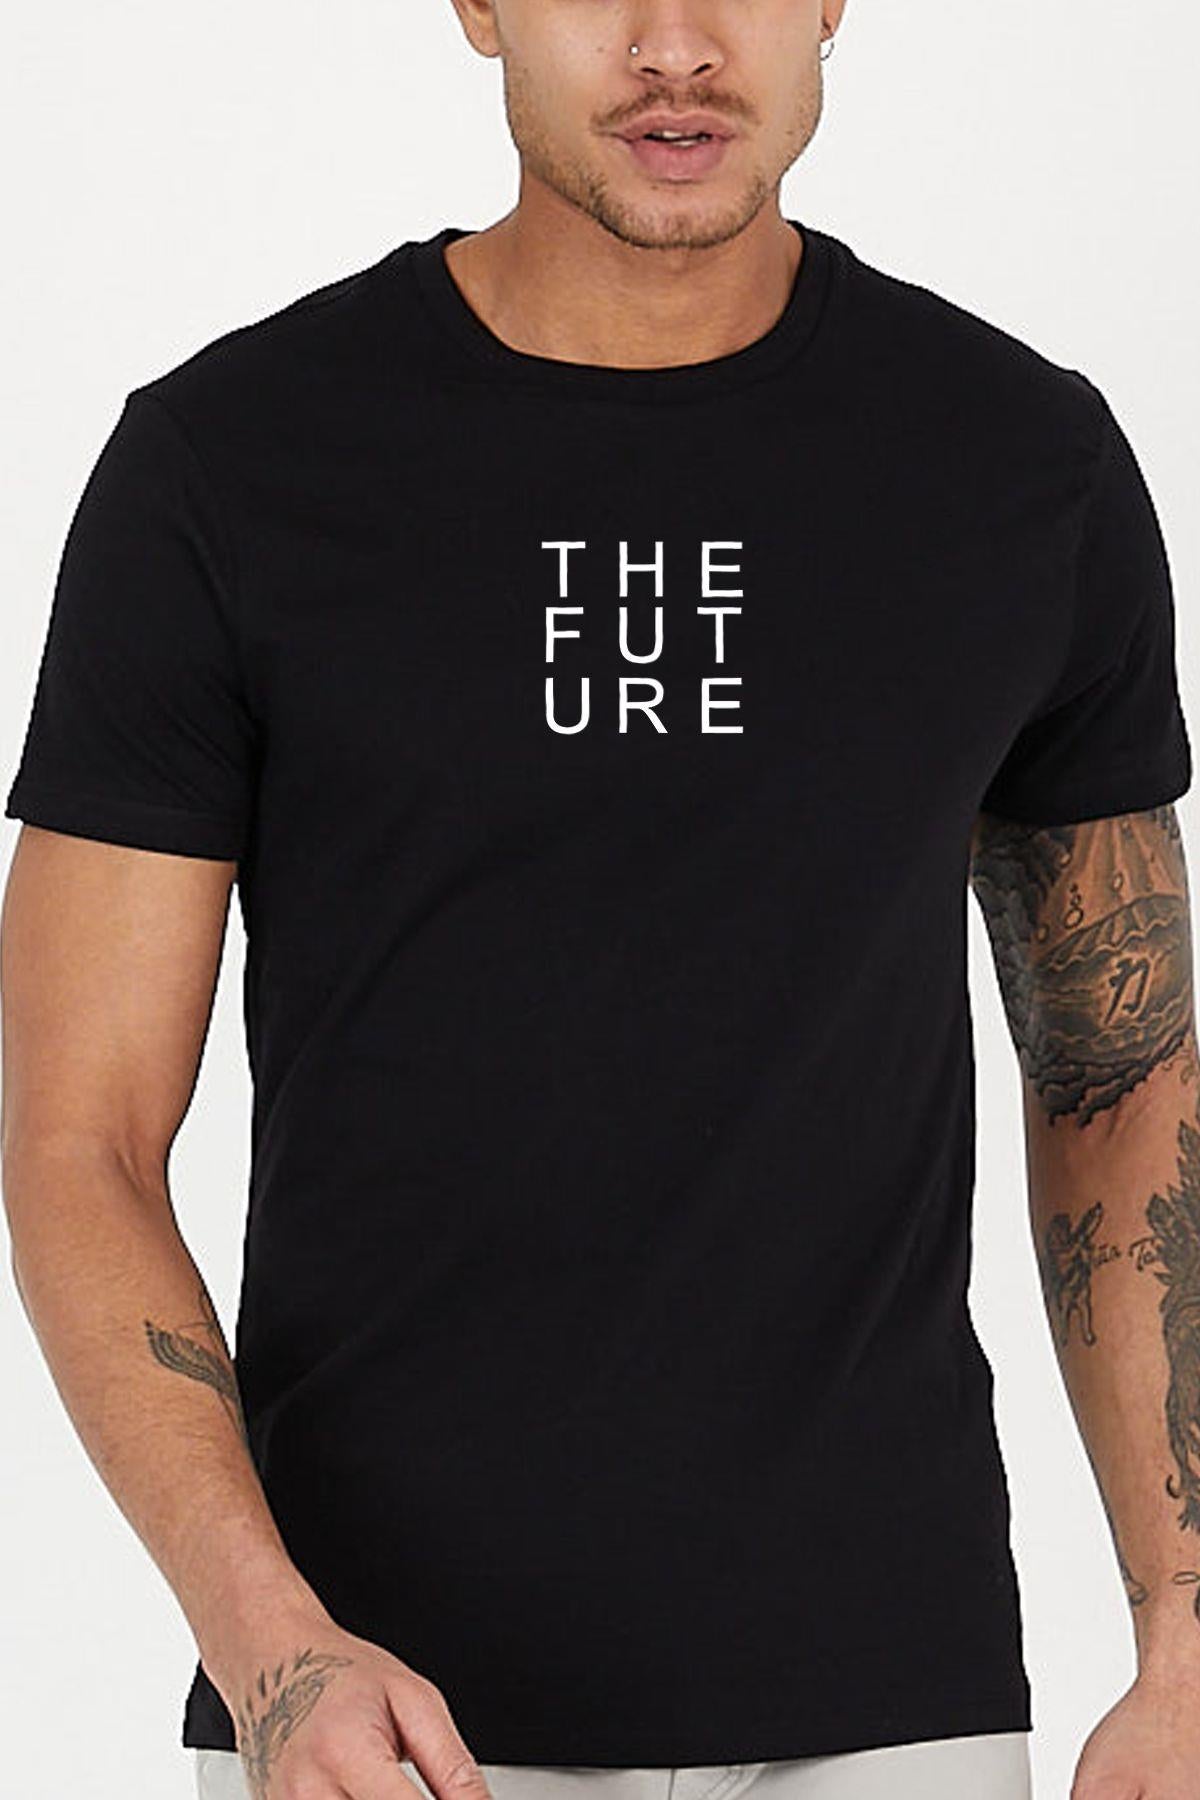 The Future Printed Crew Neck Men's T -shirt